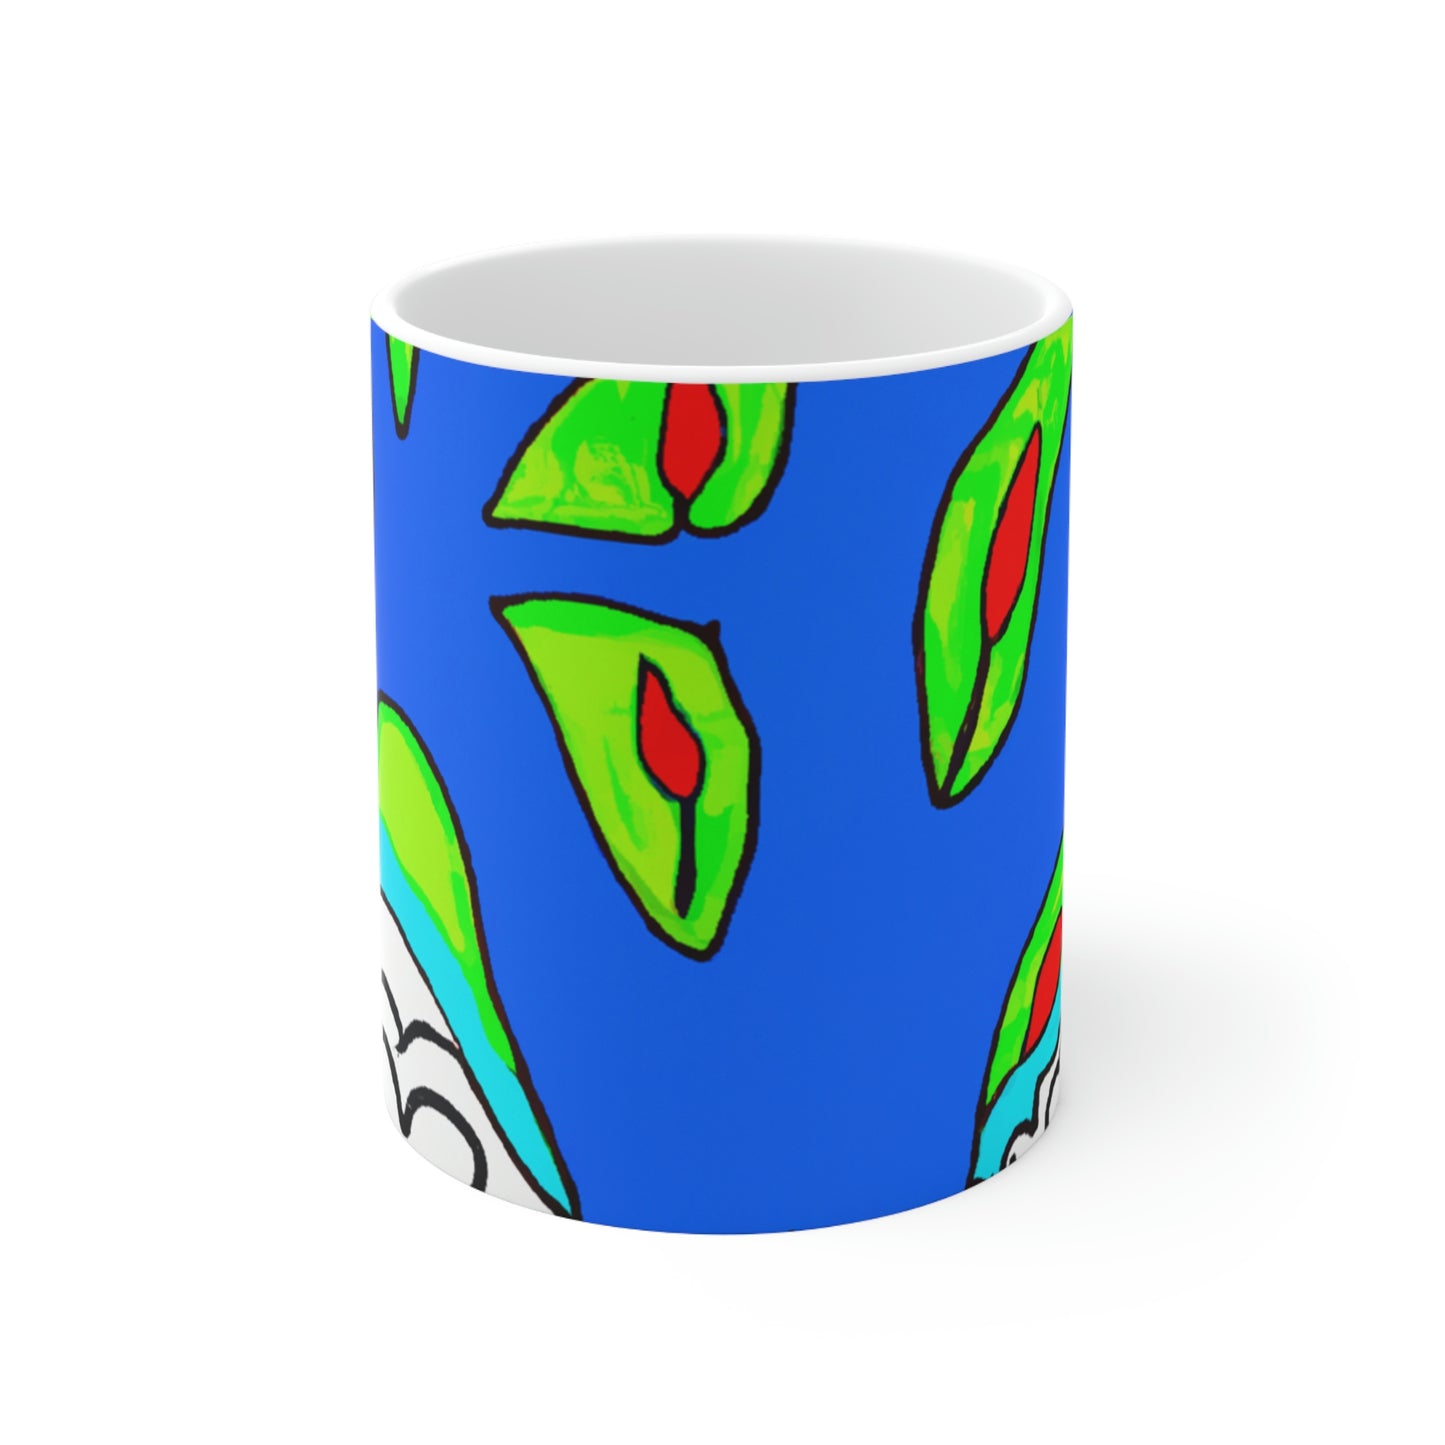 "The Cavernous Everglow" - The Alien Ceramic Mug 11 oz